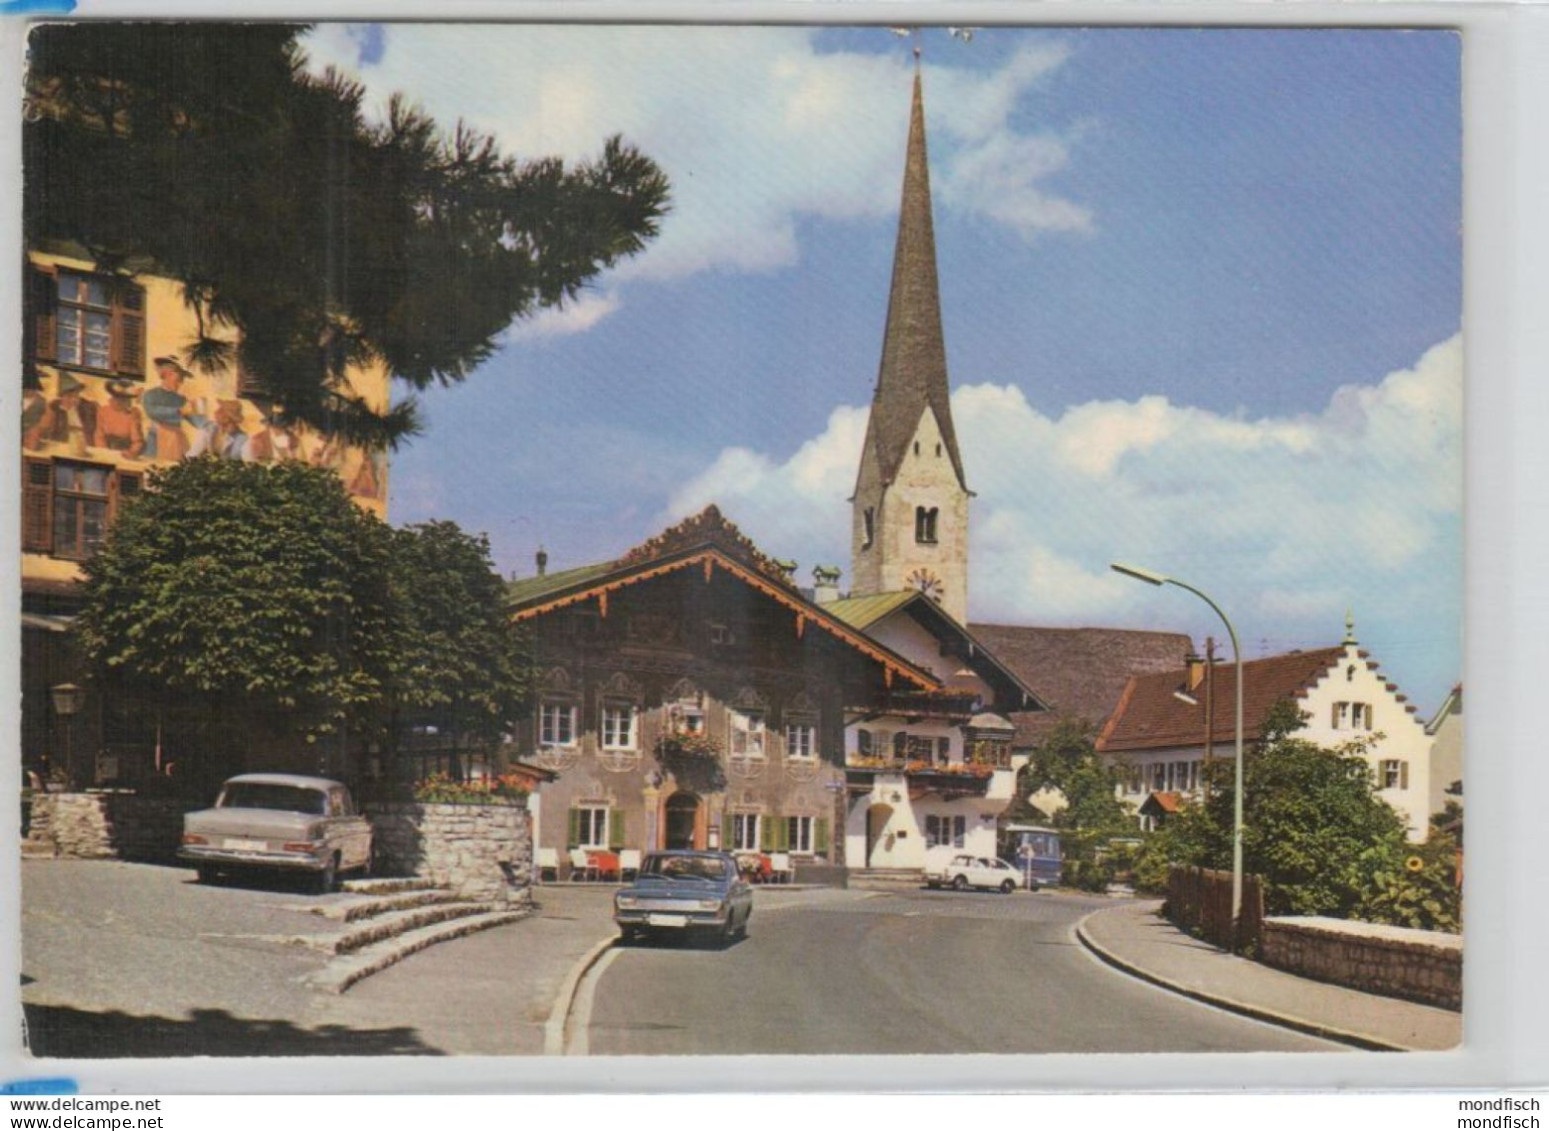 Garmisch - Partenkirchen - Alte Kirche - Opel - Mercedes - Toerisme